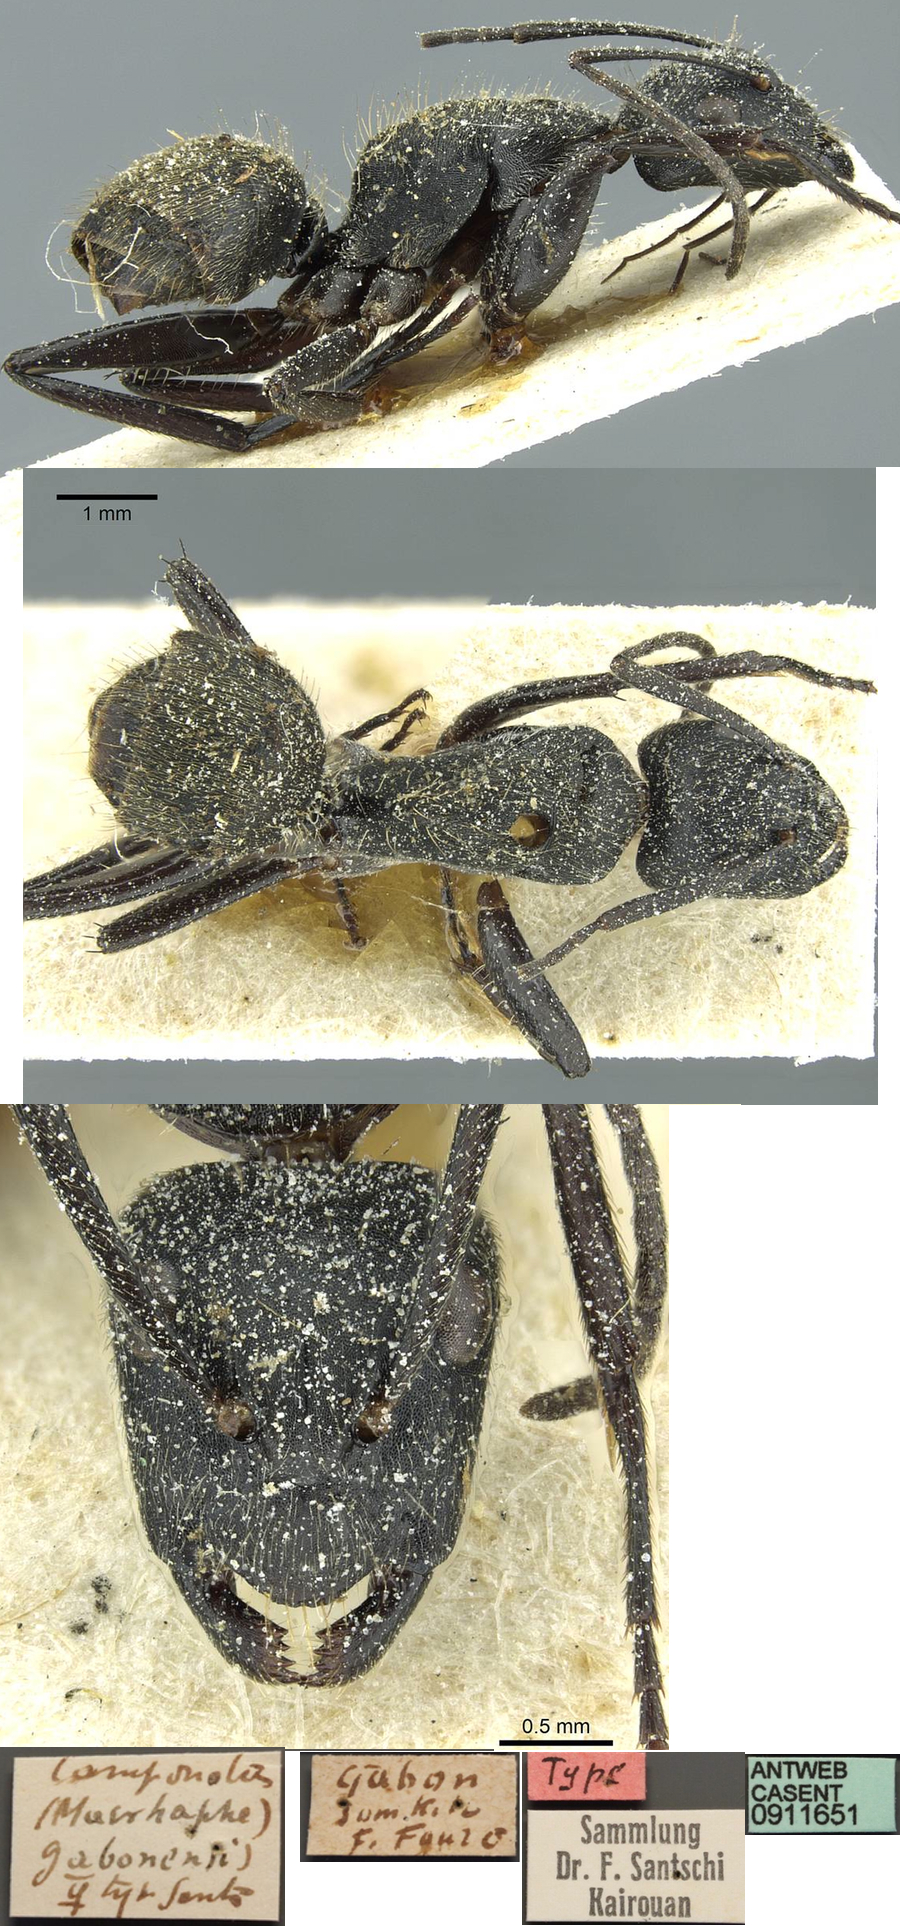 Camponotus gabonensis